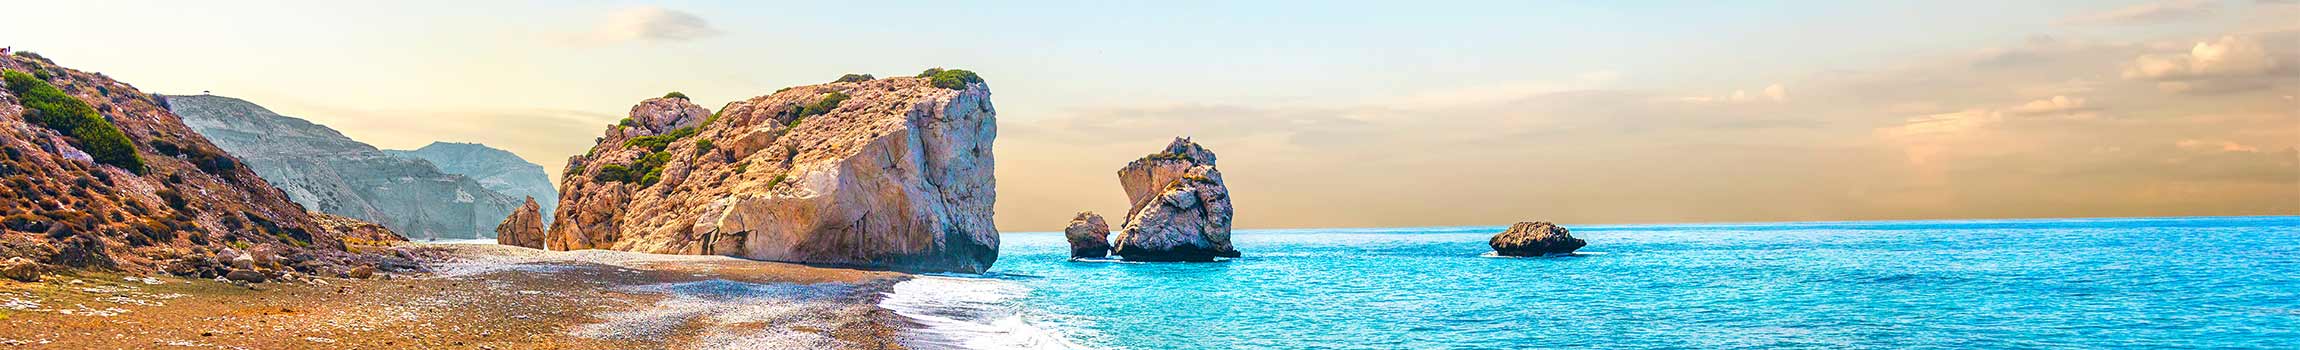 Petra Tou Romiou Beach mit dem Aphroditefelsen bei Paphos in Zypern